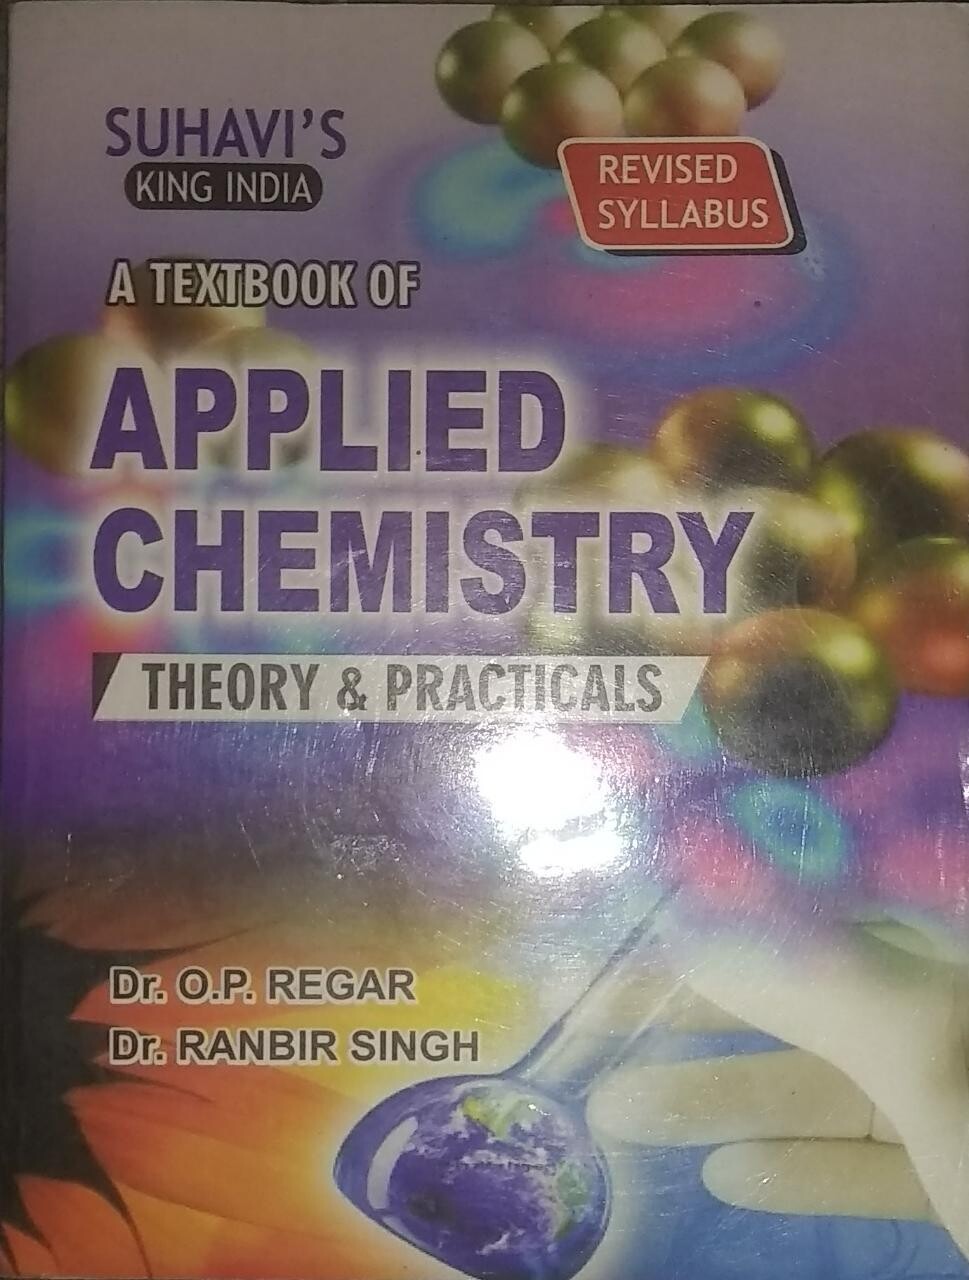 A Textbook of Applied Chemistry (Theory & Practicals) by O P Regar and Ranbir Singh
Pustakkosh.com